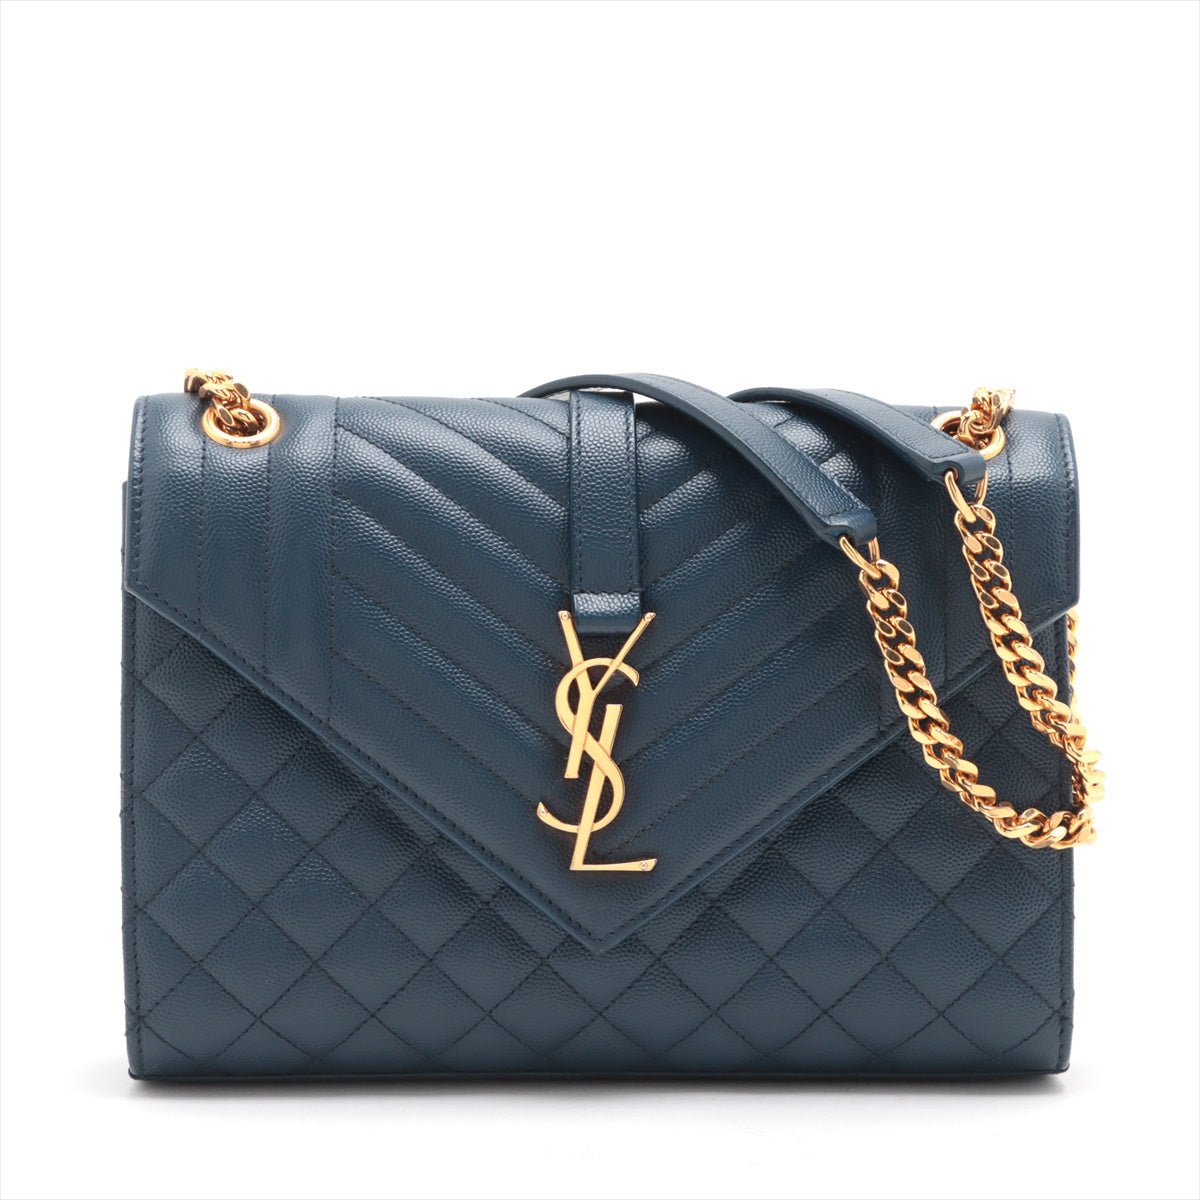 Yves Saint Laurent YSL Handbag Croc Embossed Black Patent Leather Chain  Lock | eBay